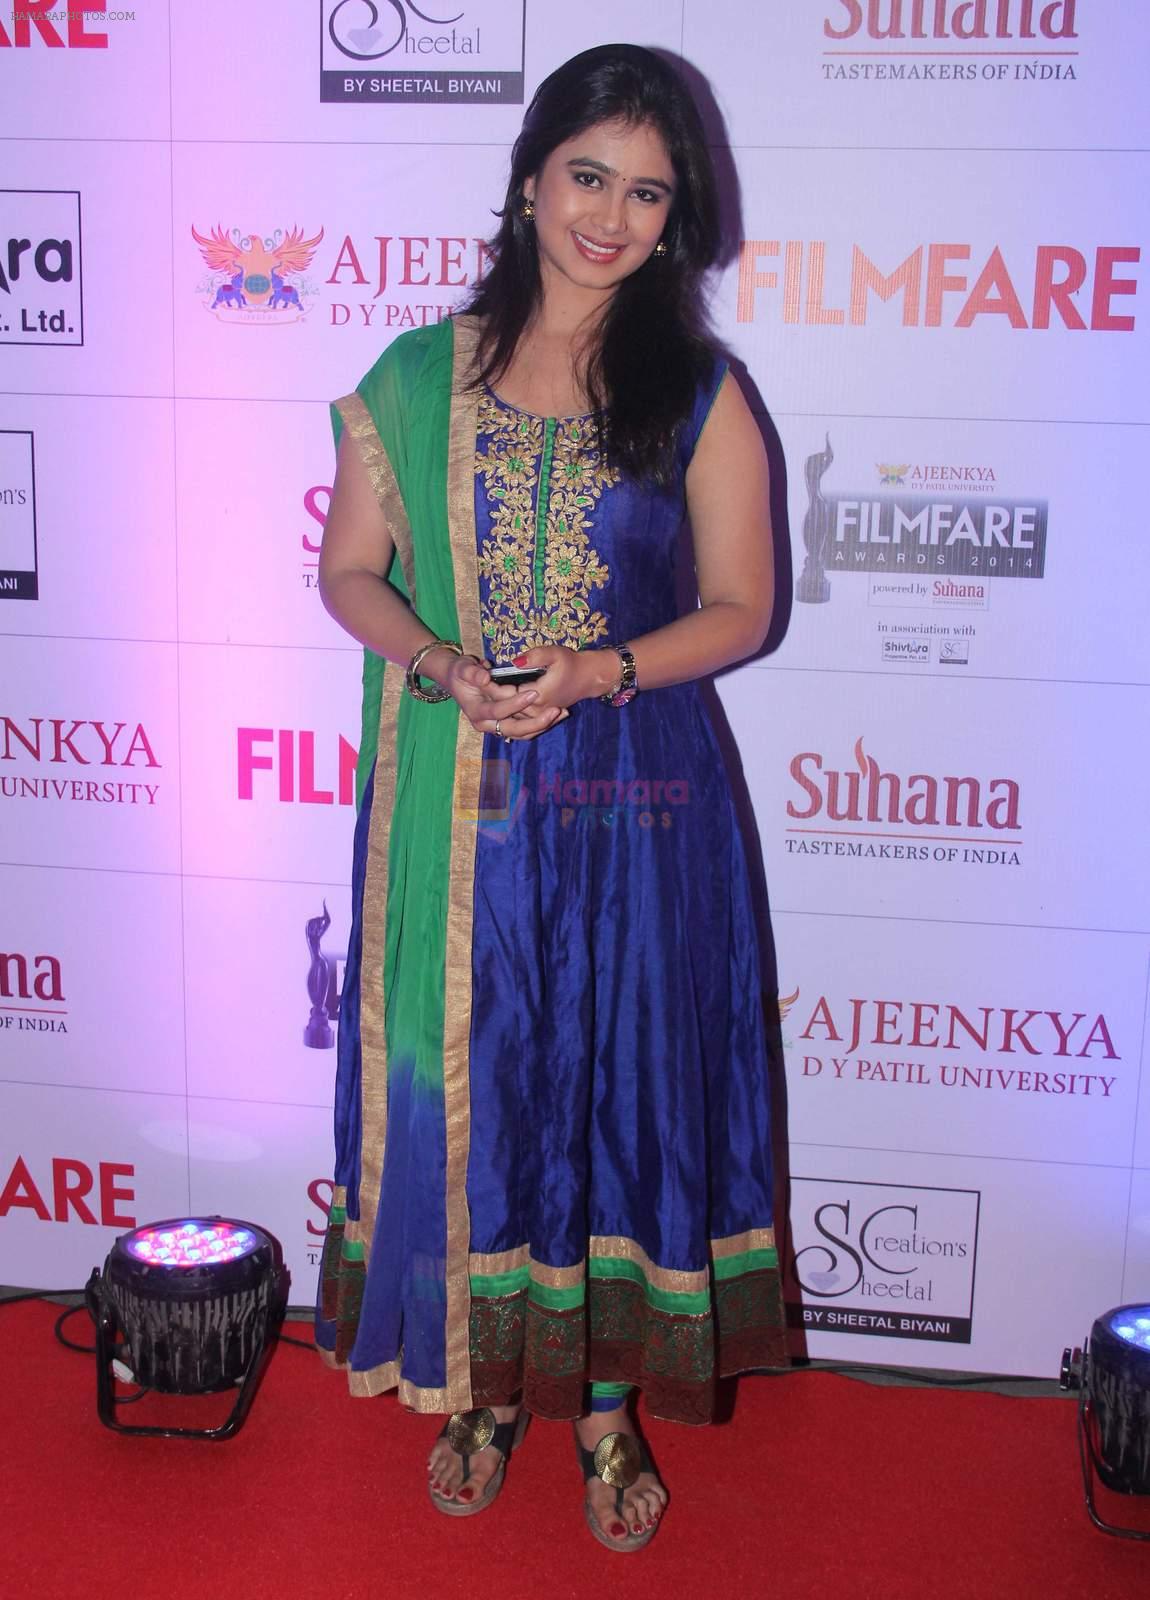 Mrunal Dusanis at the Red Carpet of _Ajeenkya DY Patil University Filmfare Awards